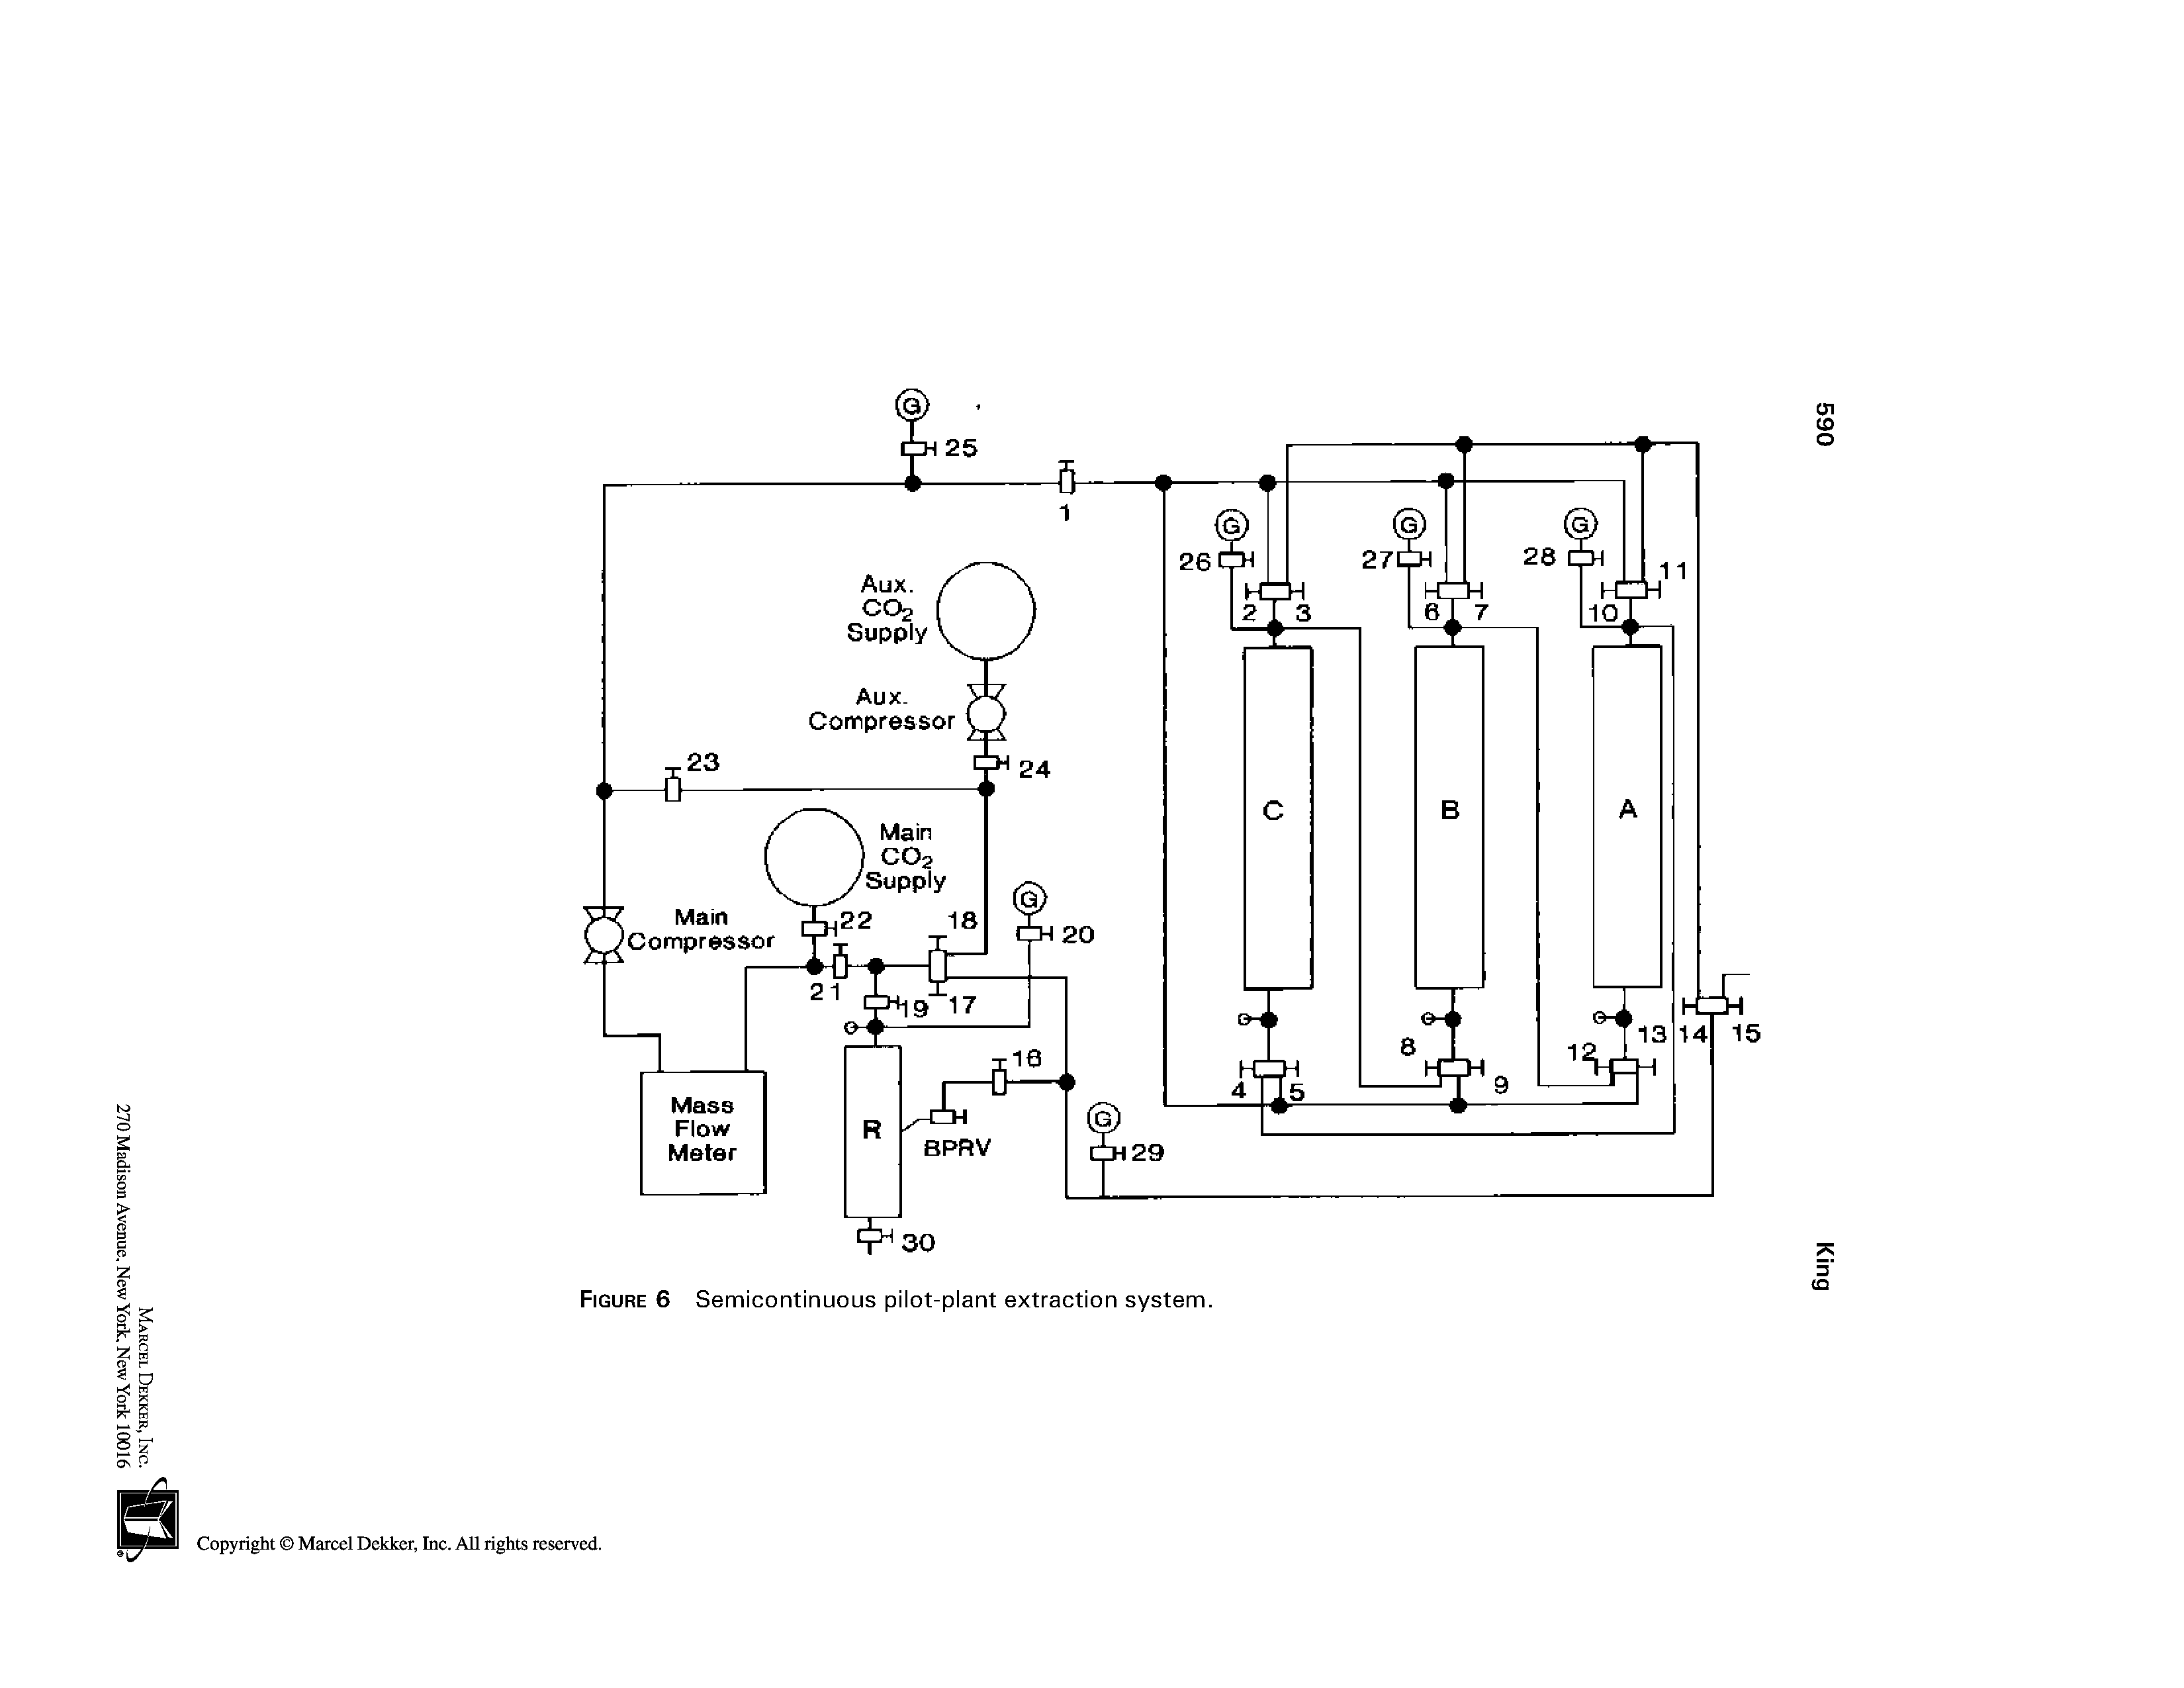 Figure 6 Semicontinuous pilot-plant extraction system.